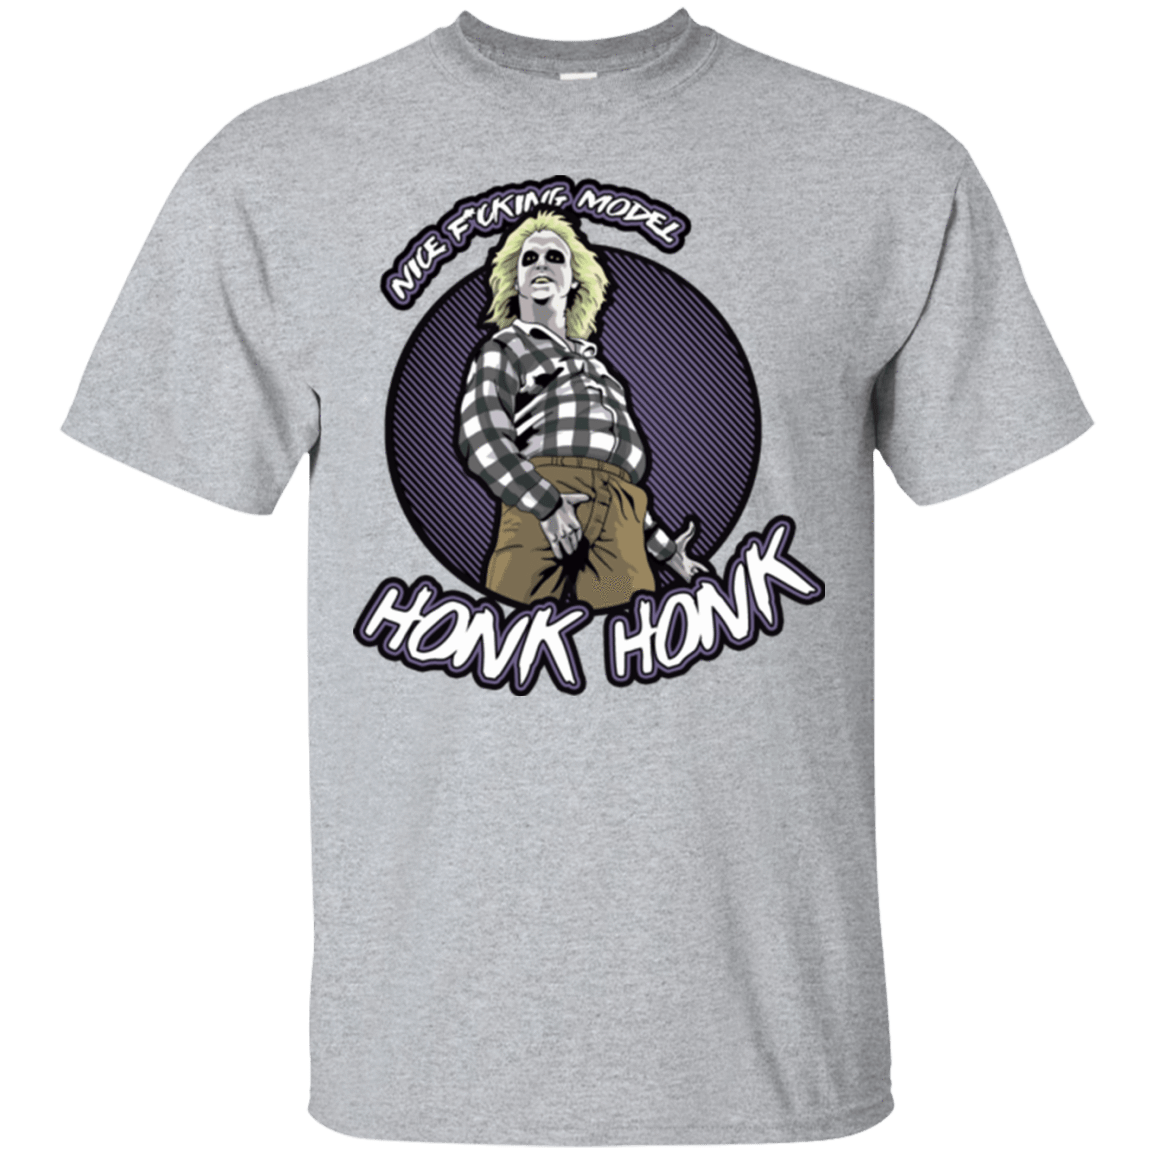 T-Shirts Sport Grey / Small Honk Honk T-Shirt